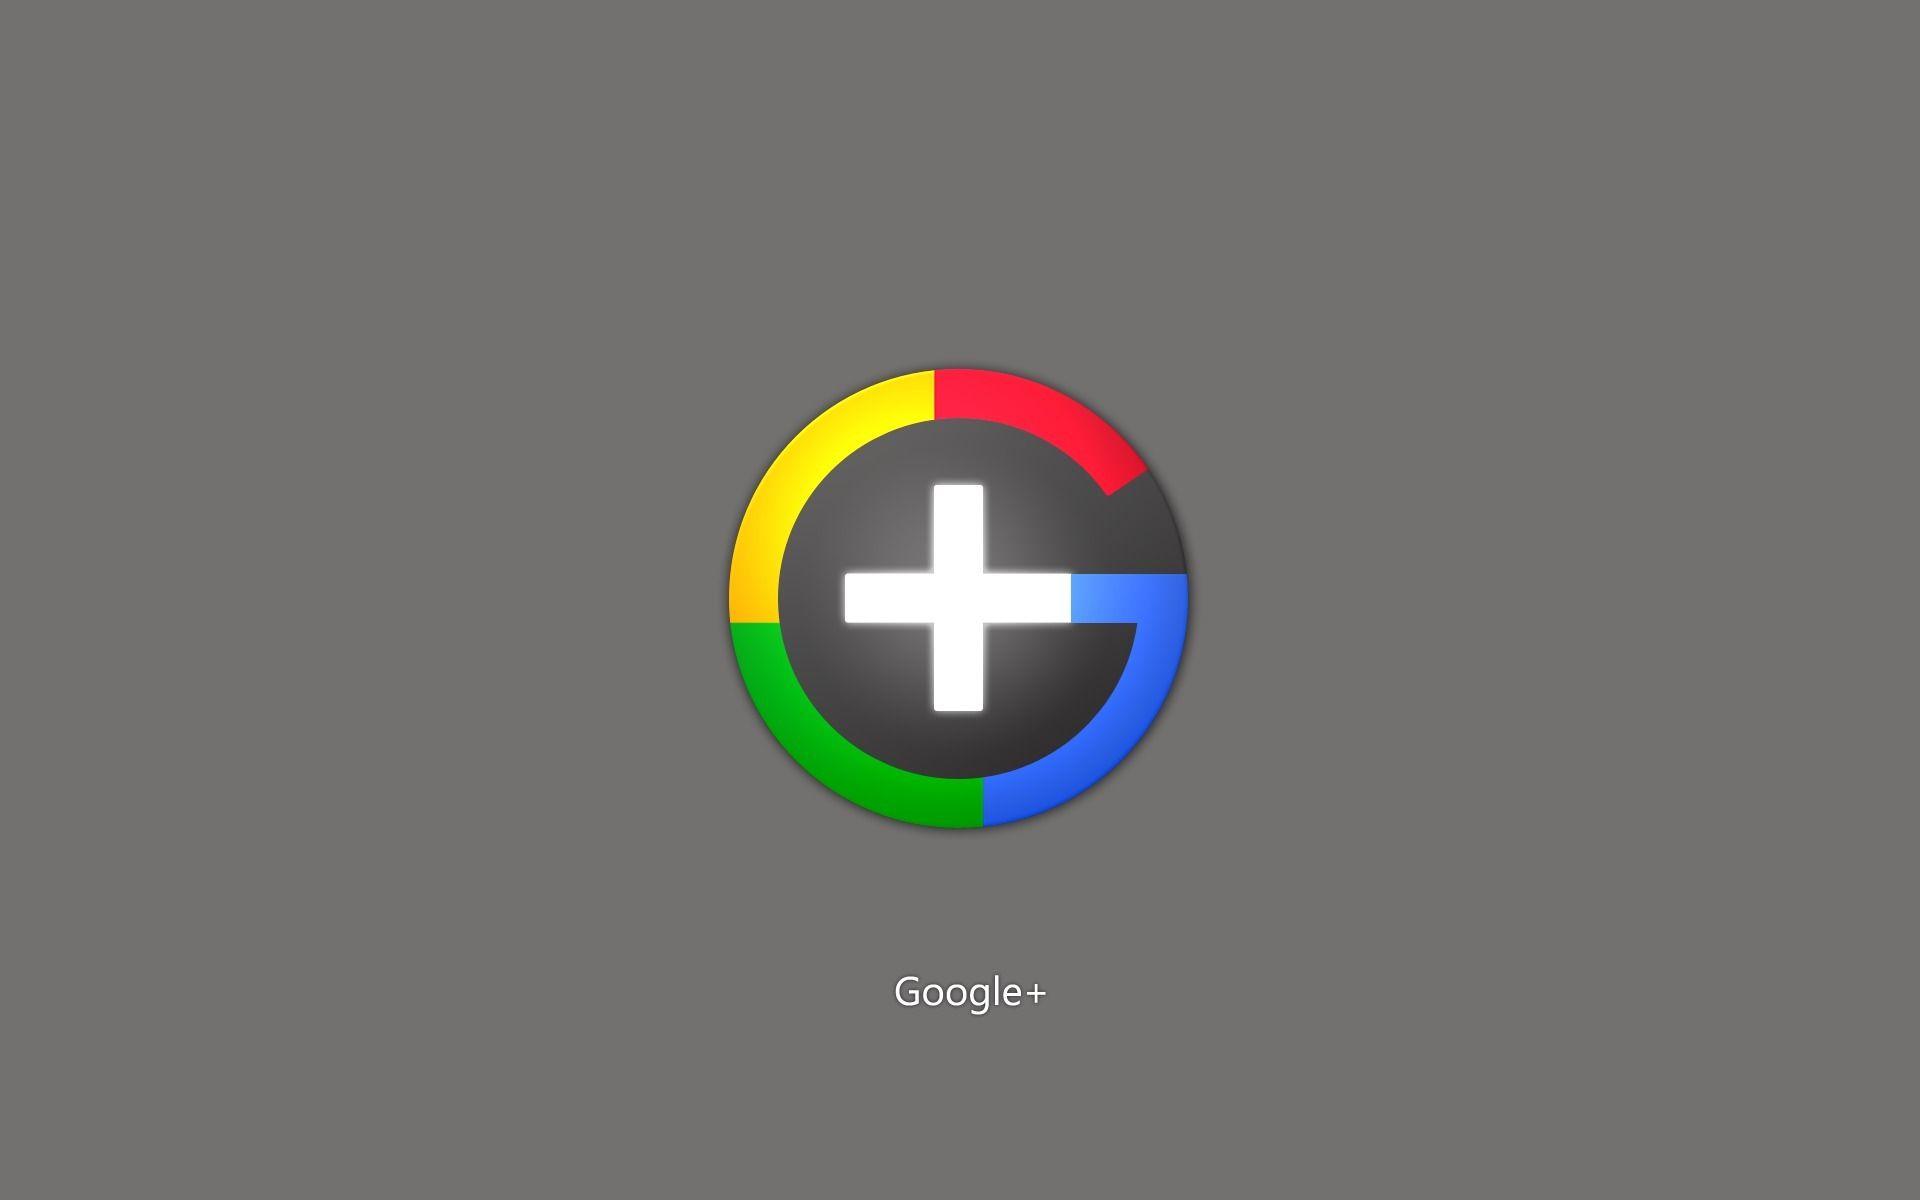 Google Plus wallpaper. Google Plus